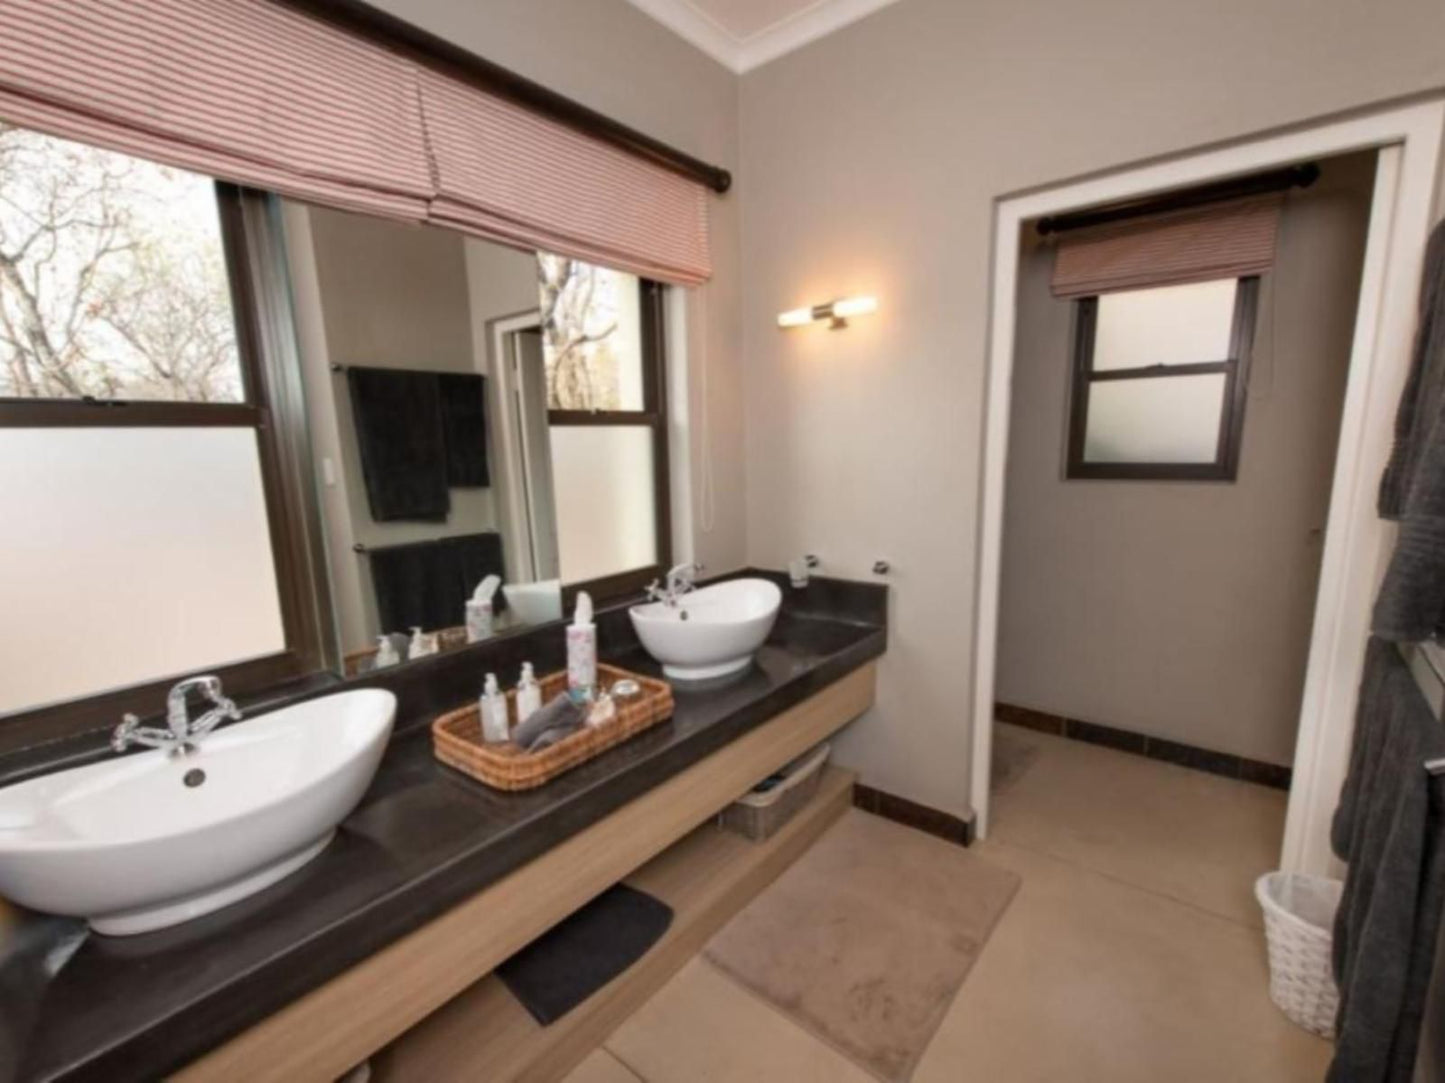 Nyaleti Lodge Hoedspruit Limpopo Province South Africa Bathroom